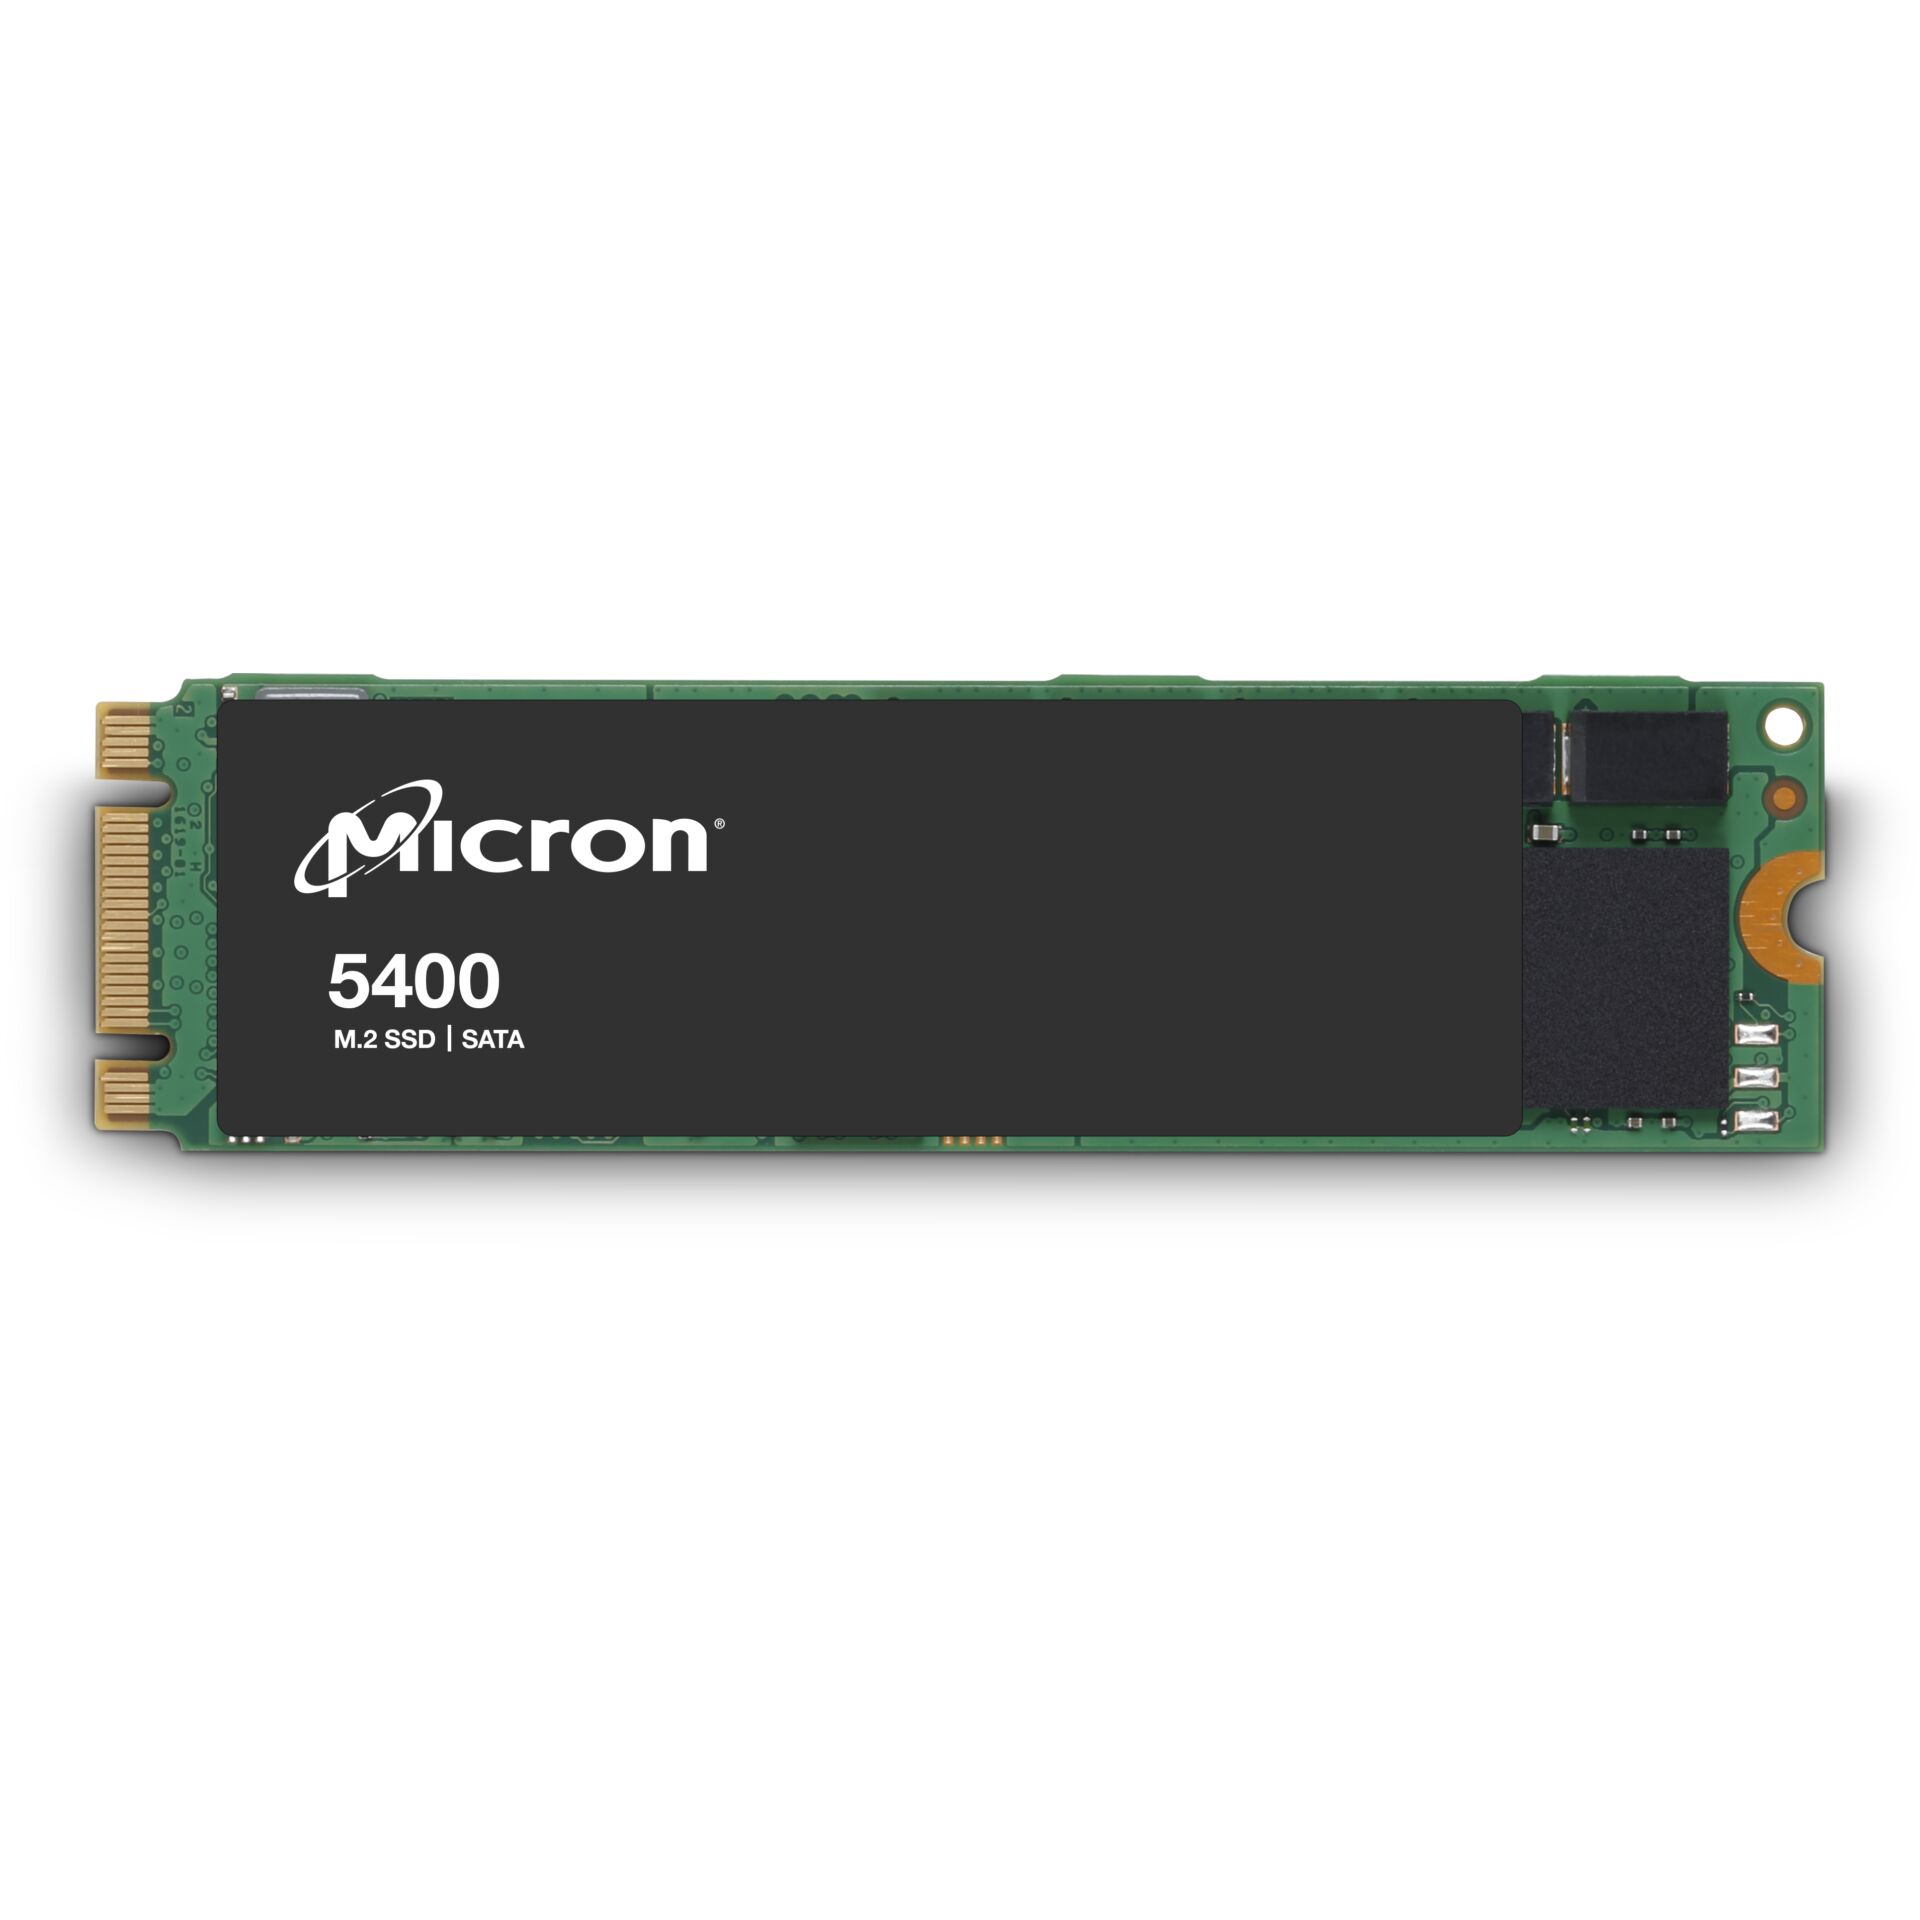 Micron 5400 PRO 960GB SATA M.2 SSD